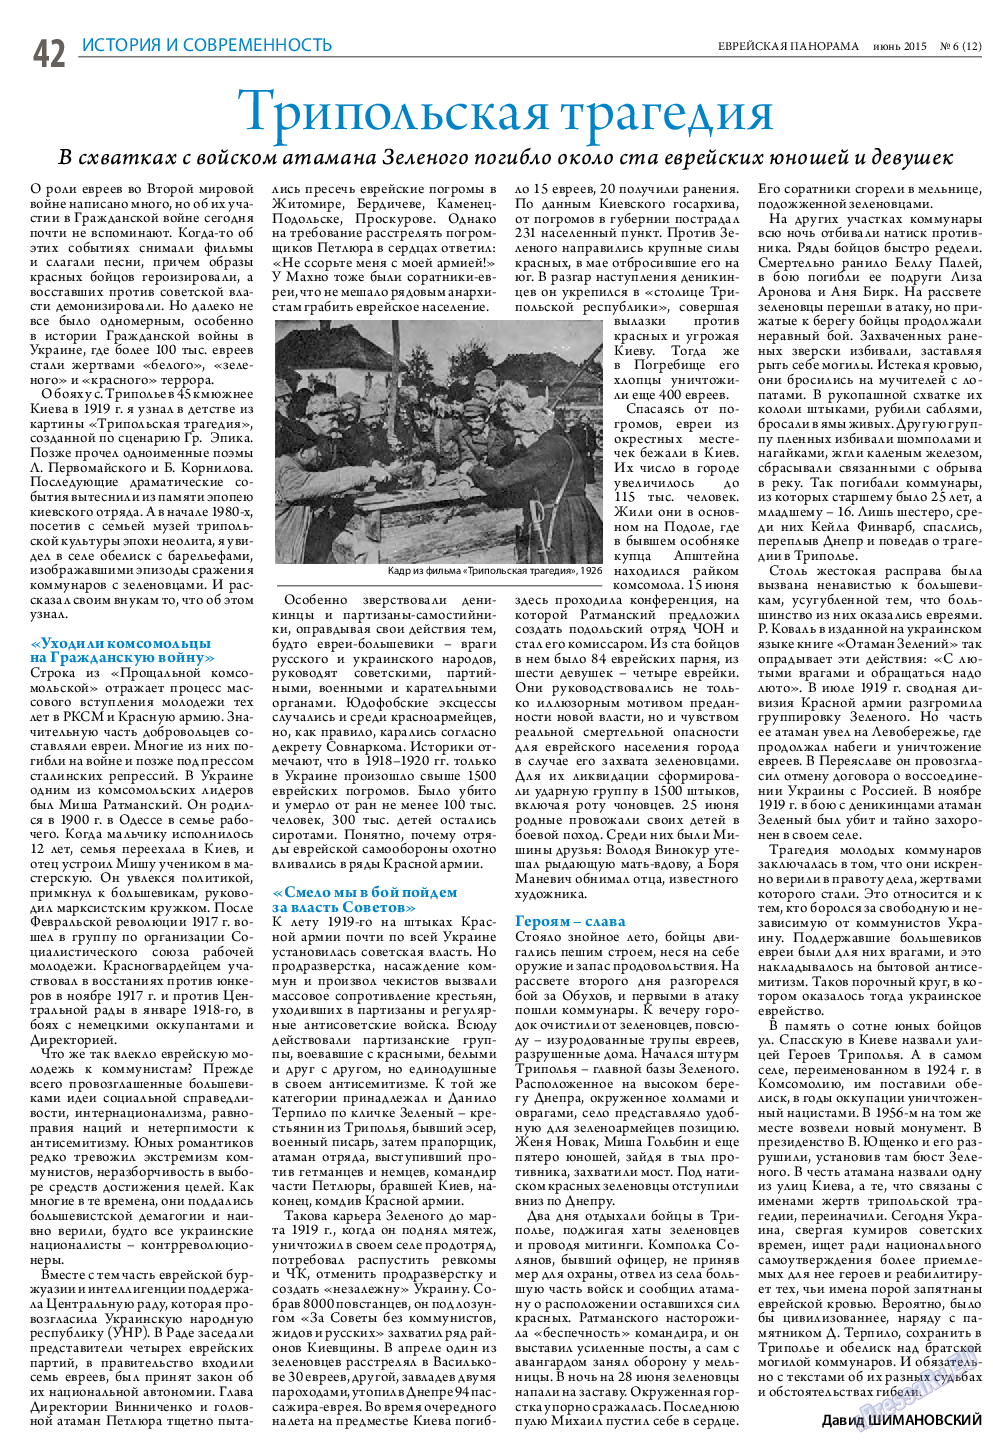 Еврейская панорама, газета. 2015 №6 стр.42